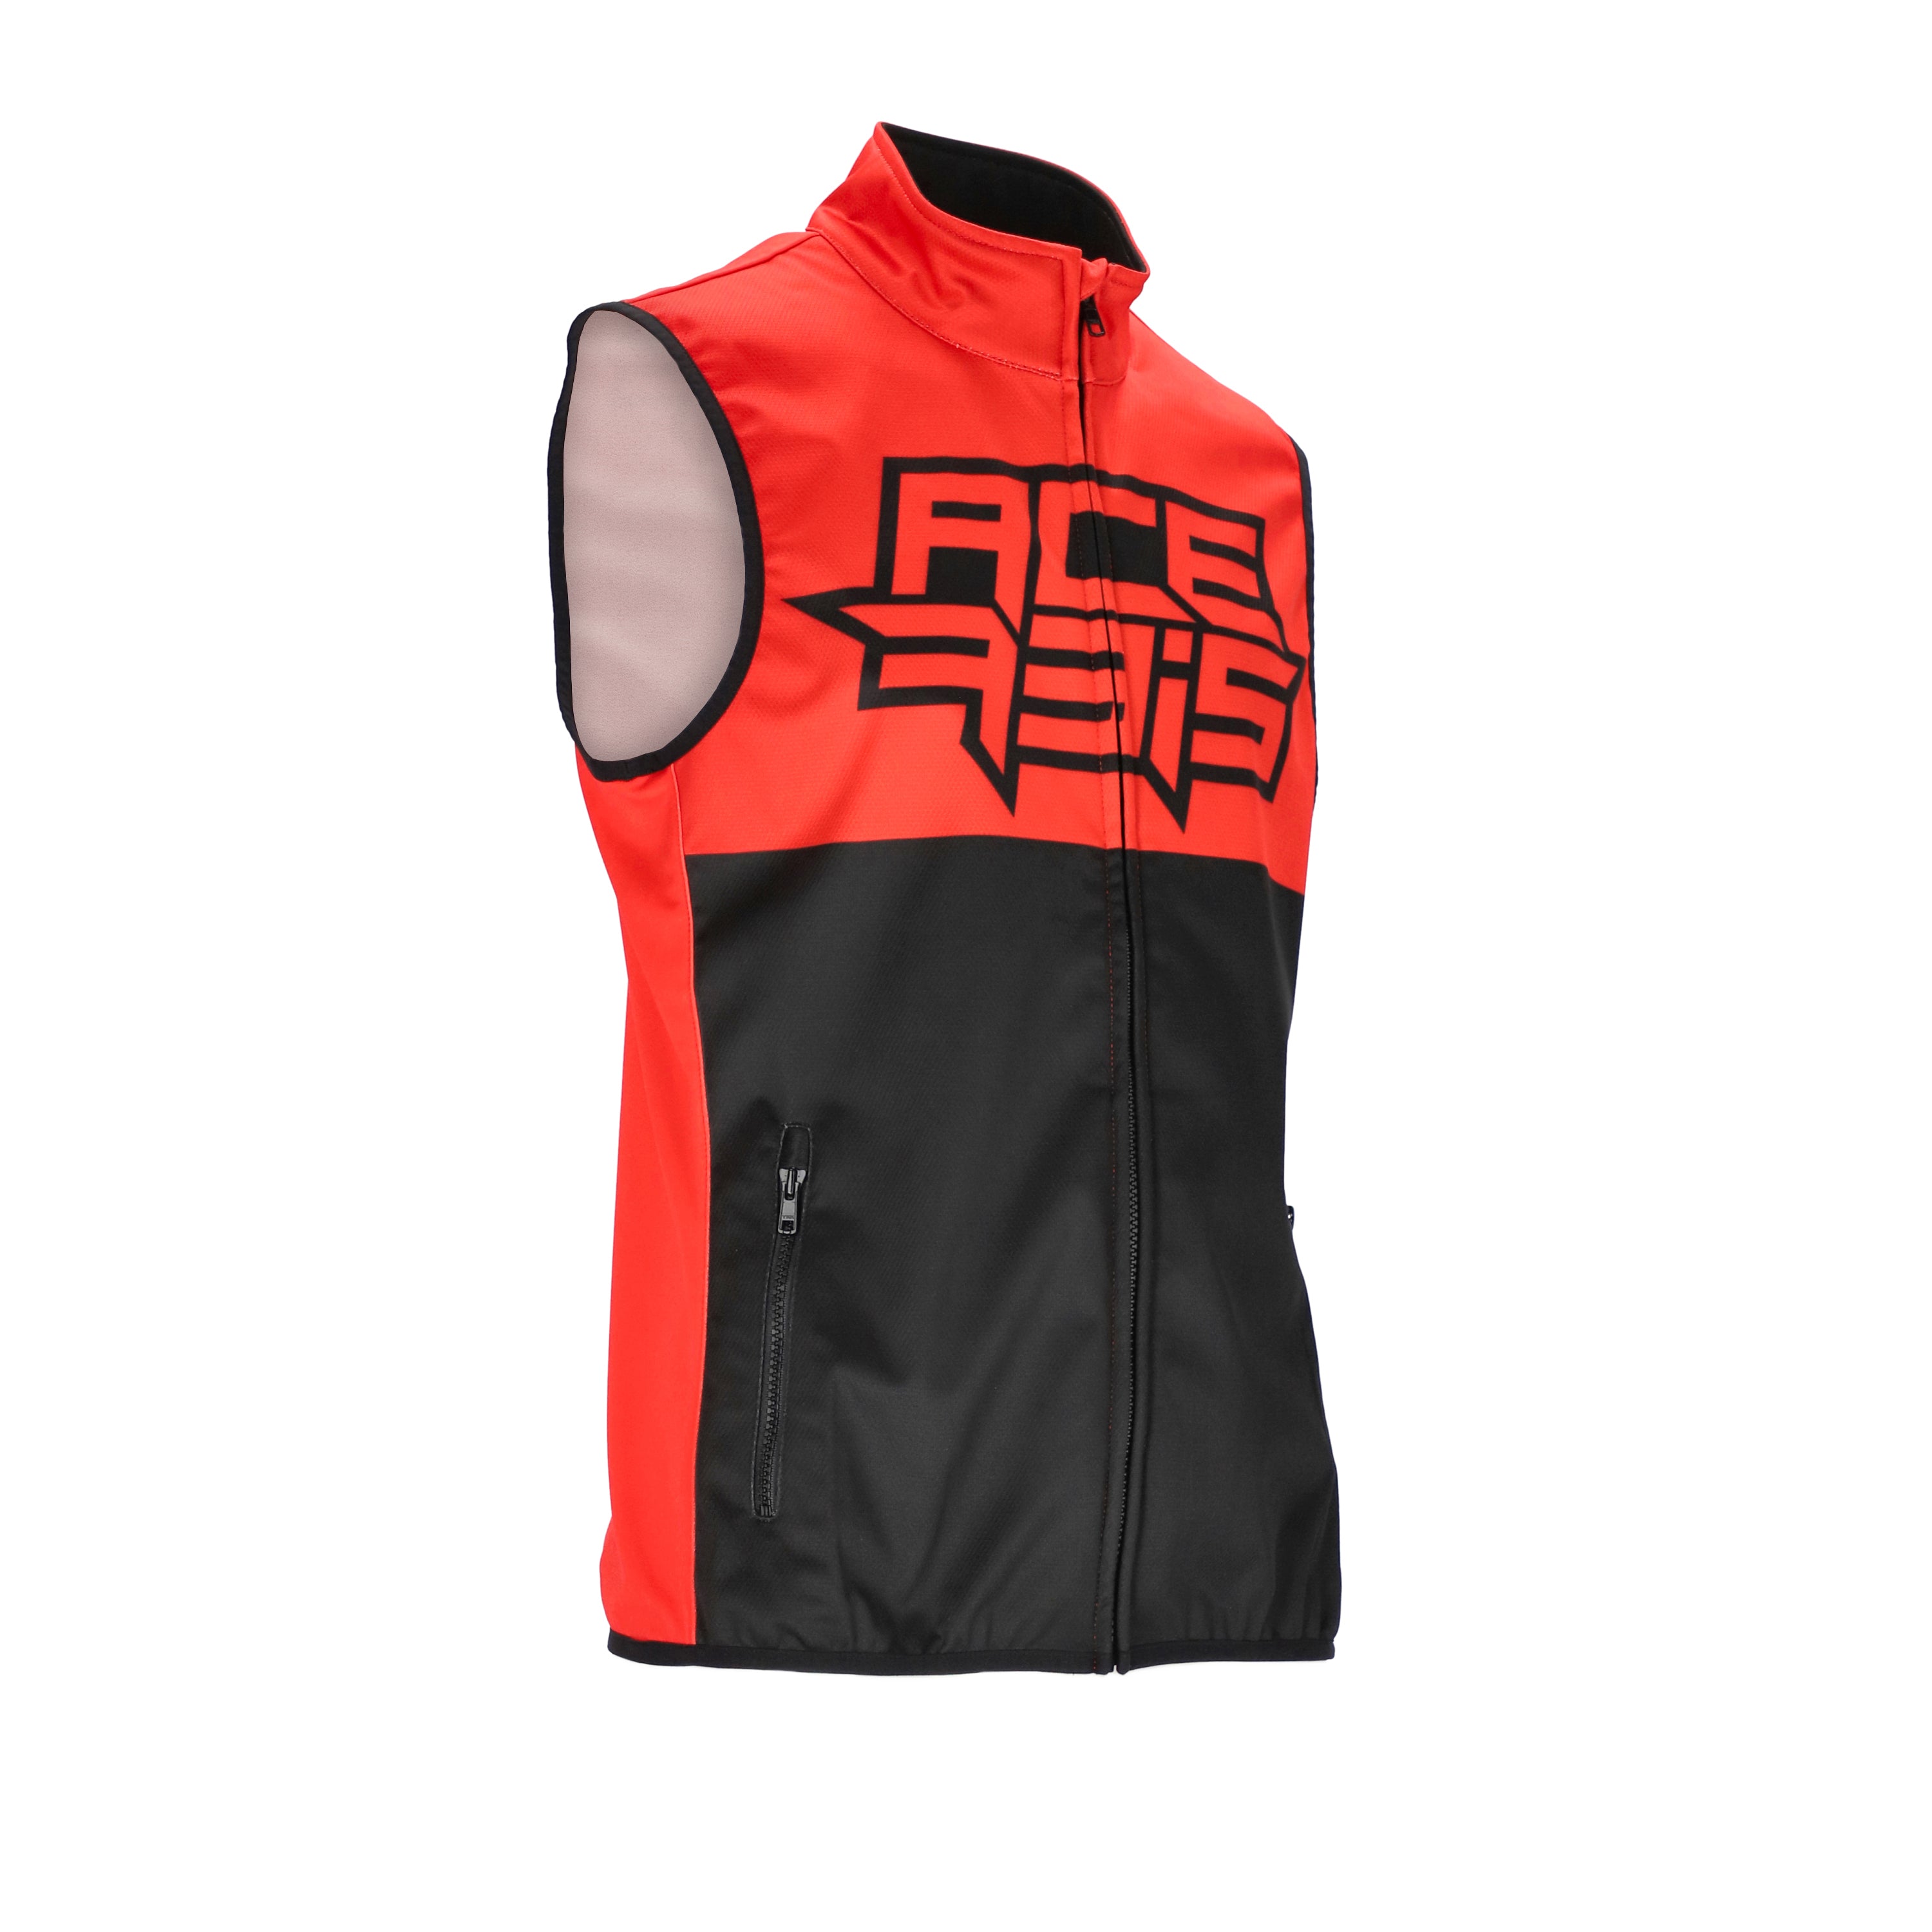 Acerbis MX Linear Vest Black/Red